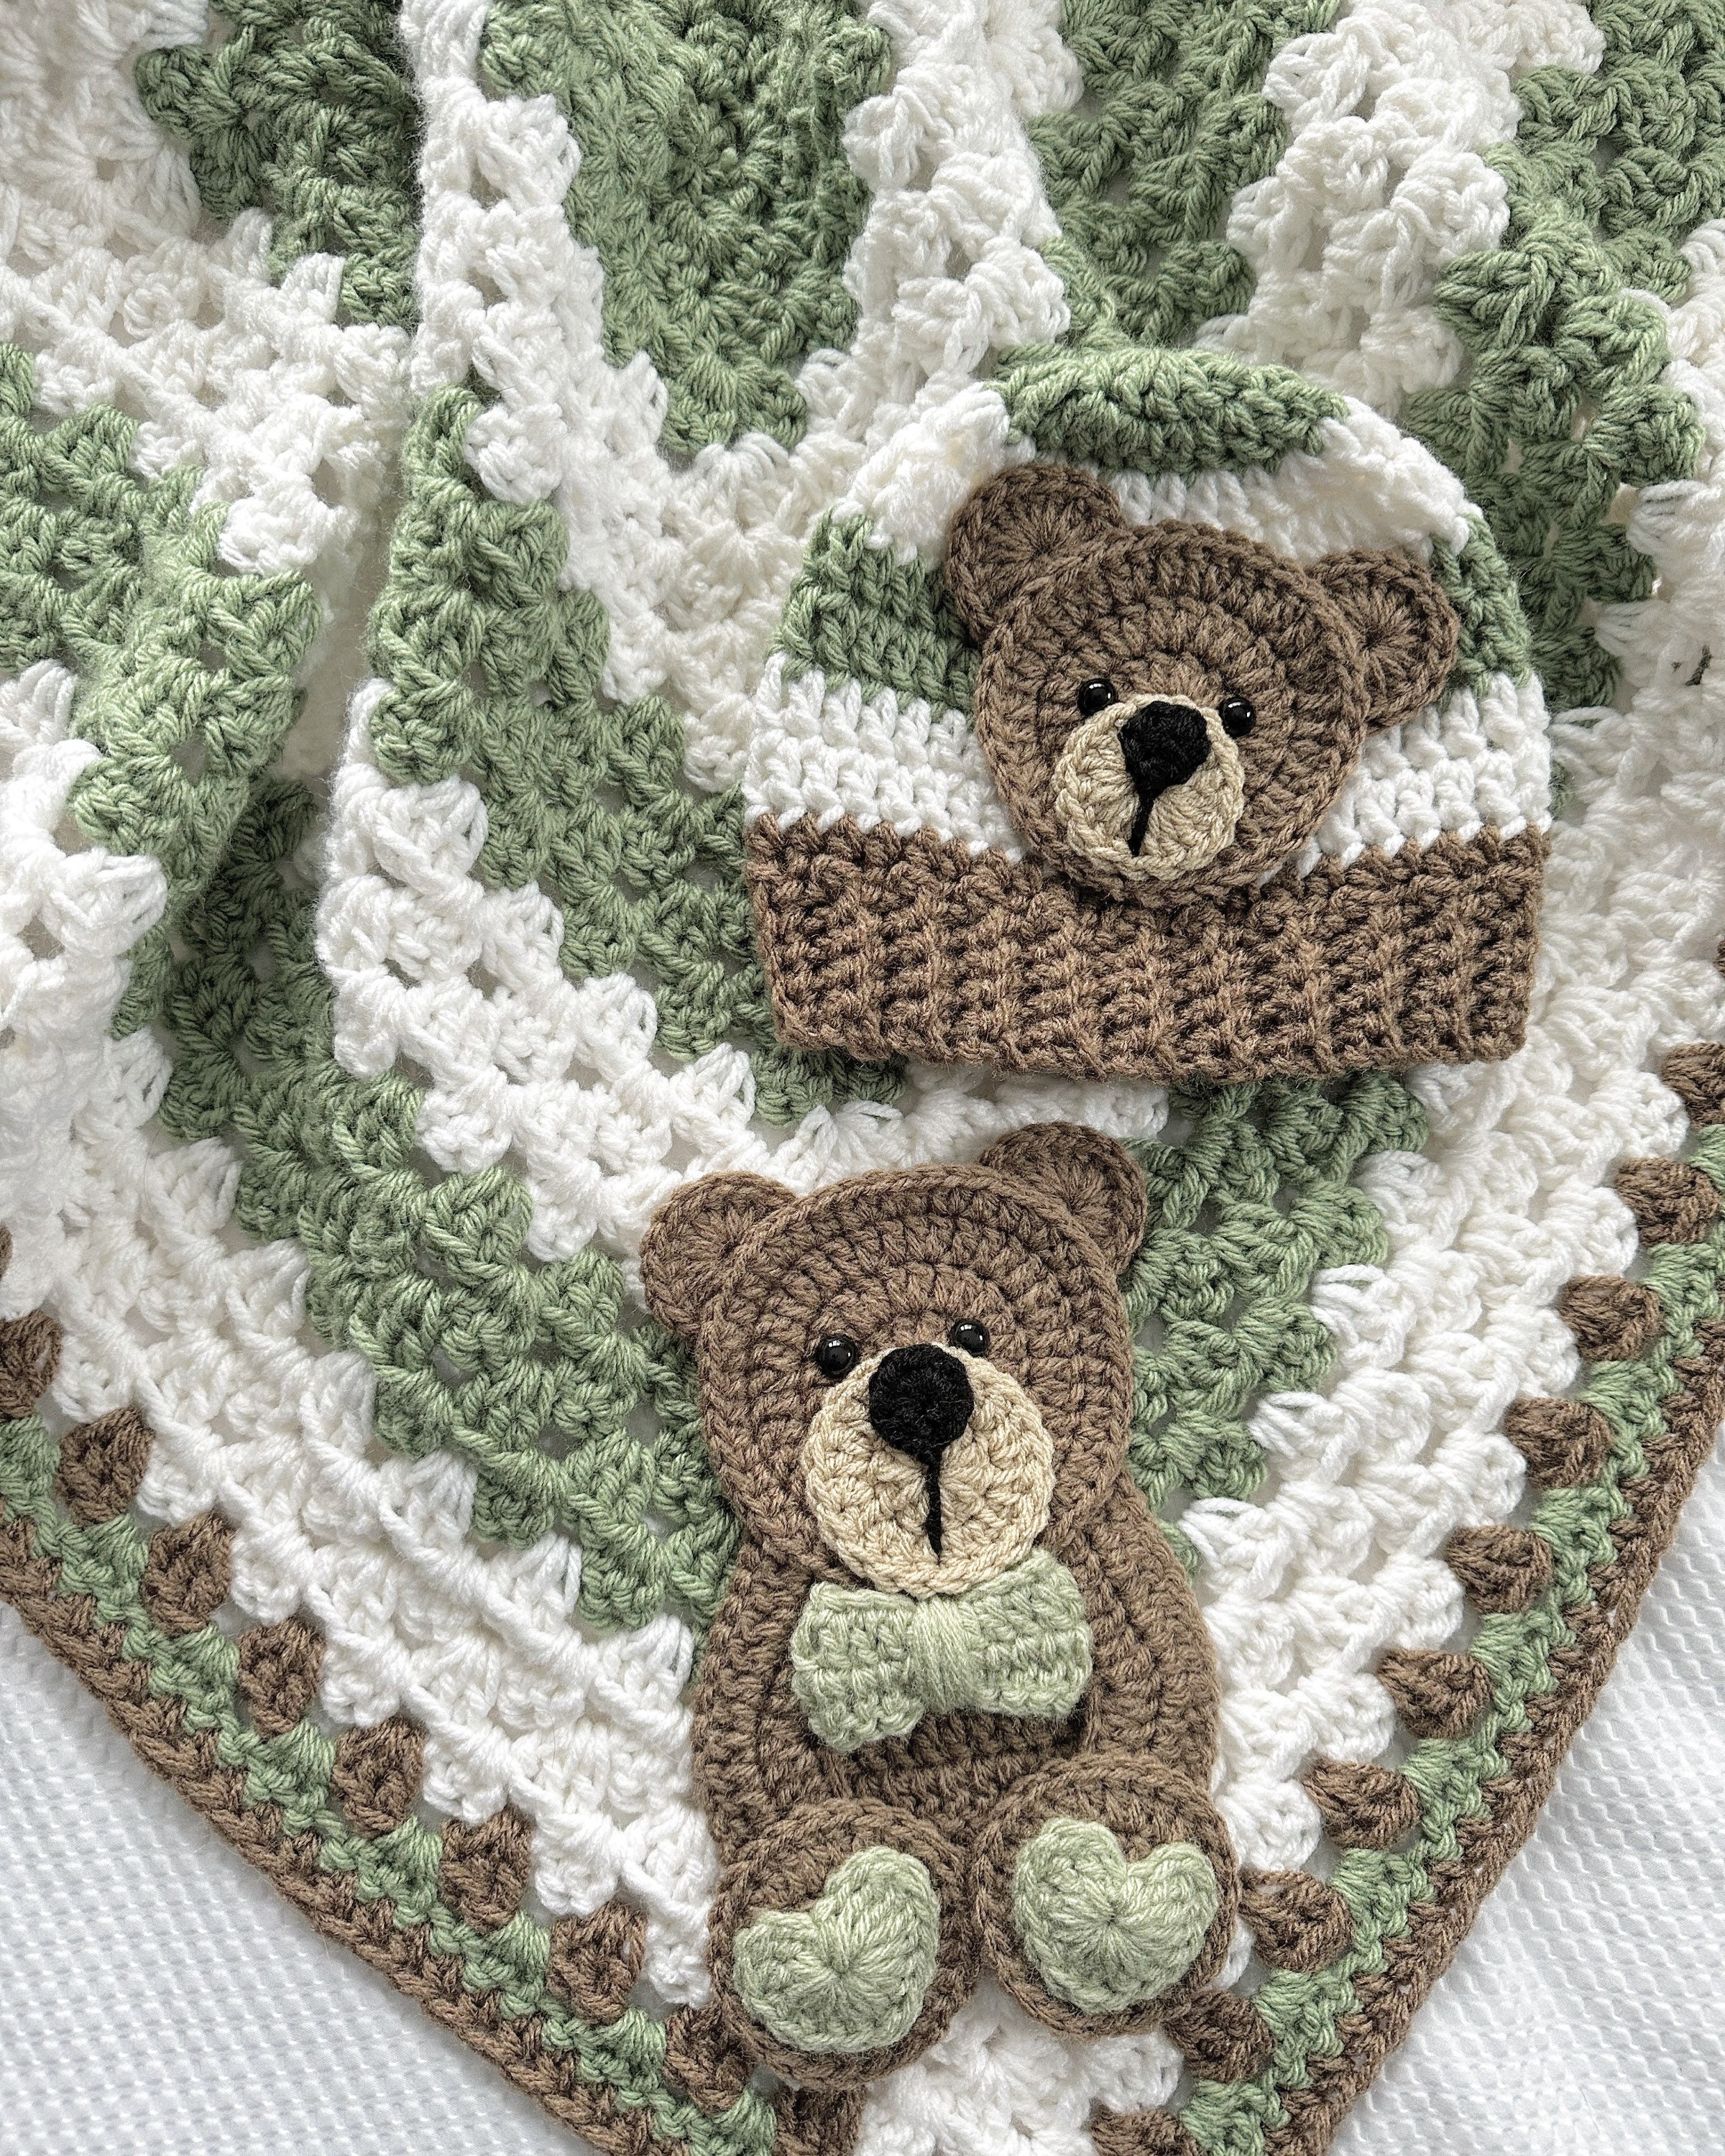 Family Tree Crochet Baby Blanket Kit Shaniko Wool – Appalachian Baby Design